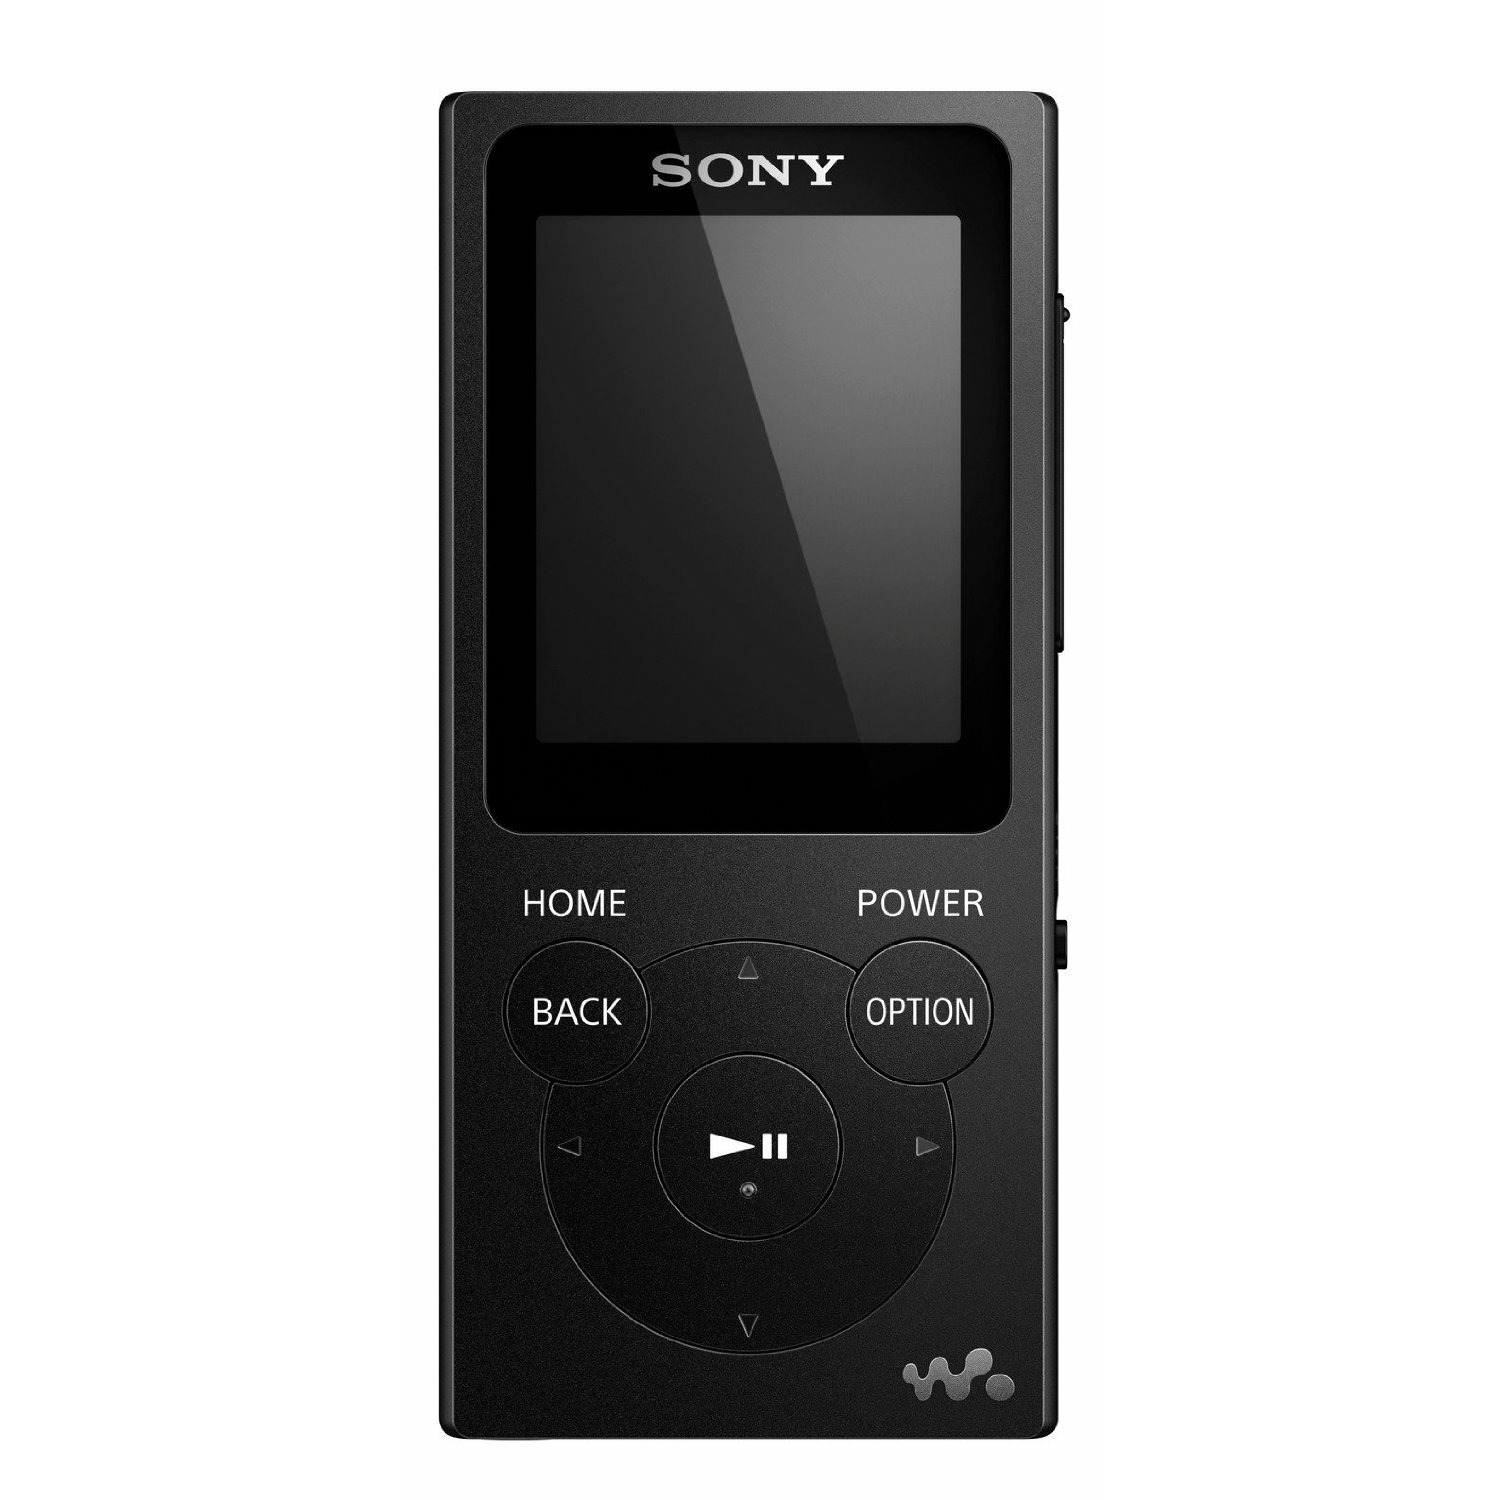 Музыкальный пятиполосный плеер черный. Sony NW-e394. Sony NW-e394 (черный). Sony Walkman NW e393. Плеер Sony Walkman NW-e394.